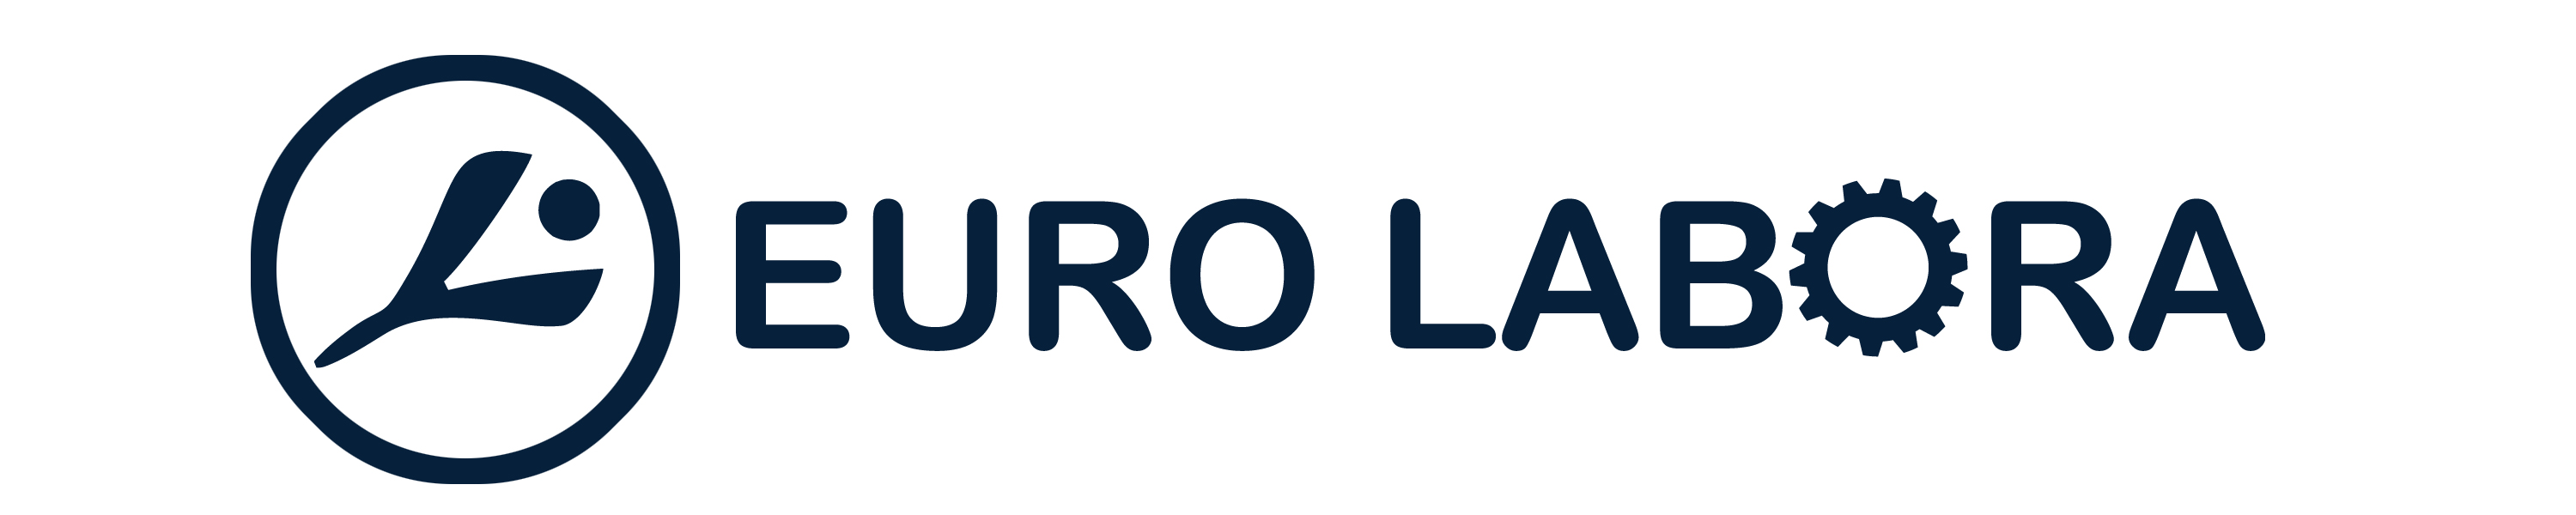 Logo - Euro Labora